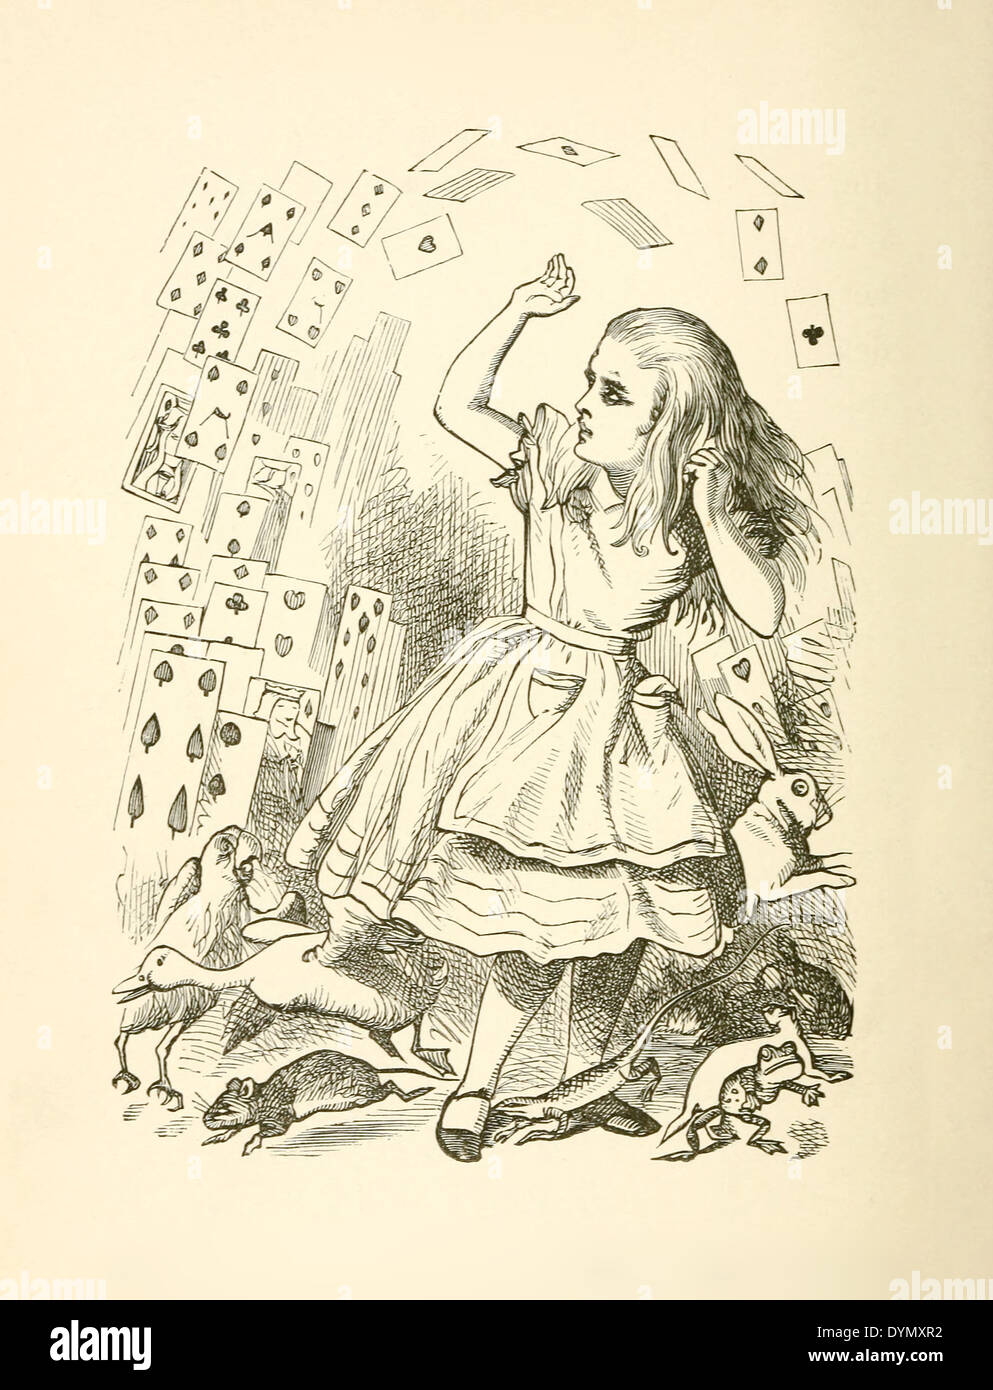 https://c8.alamy.com/comp/DYMXR2/john-tenniel-1820-1914-illustration-from-lewis-carrolls-alice-in-wonderland-DYMXR2.jpg